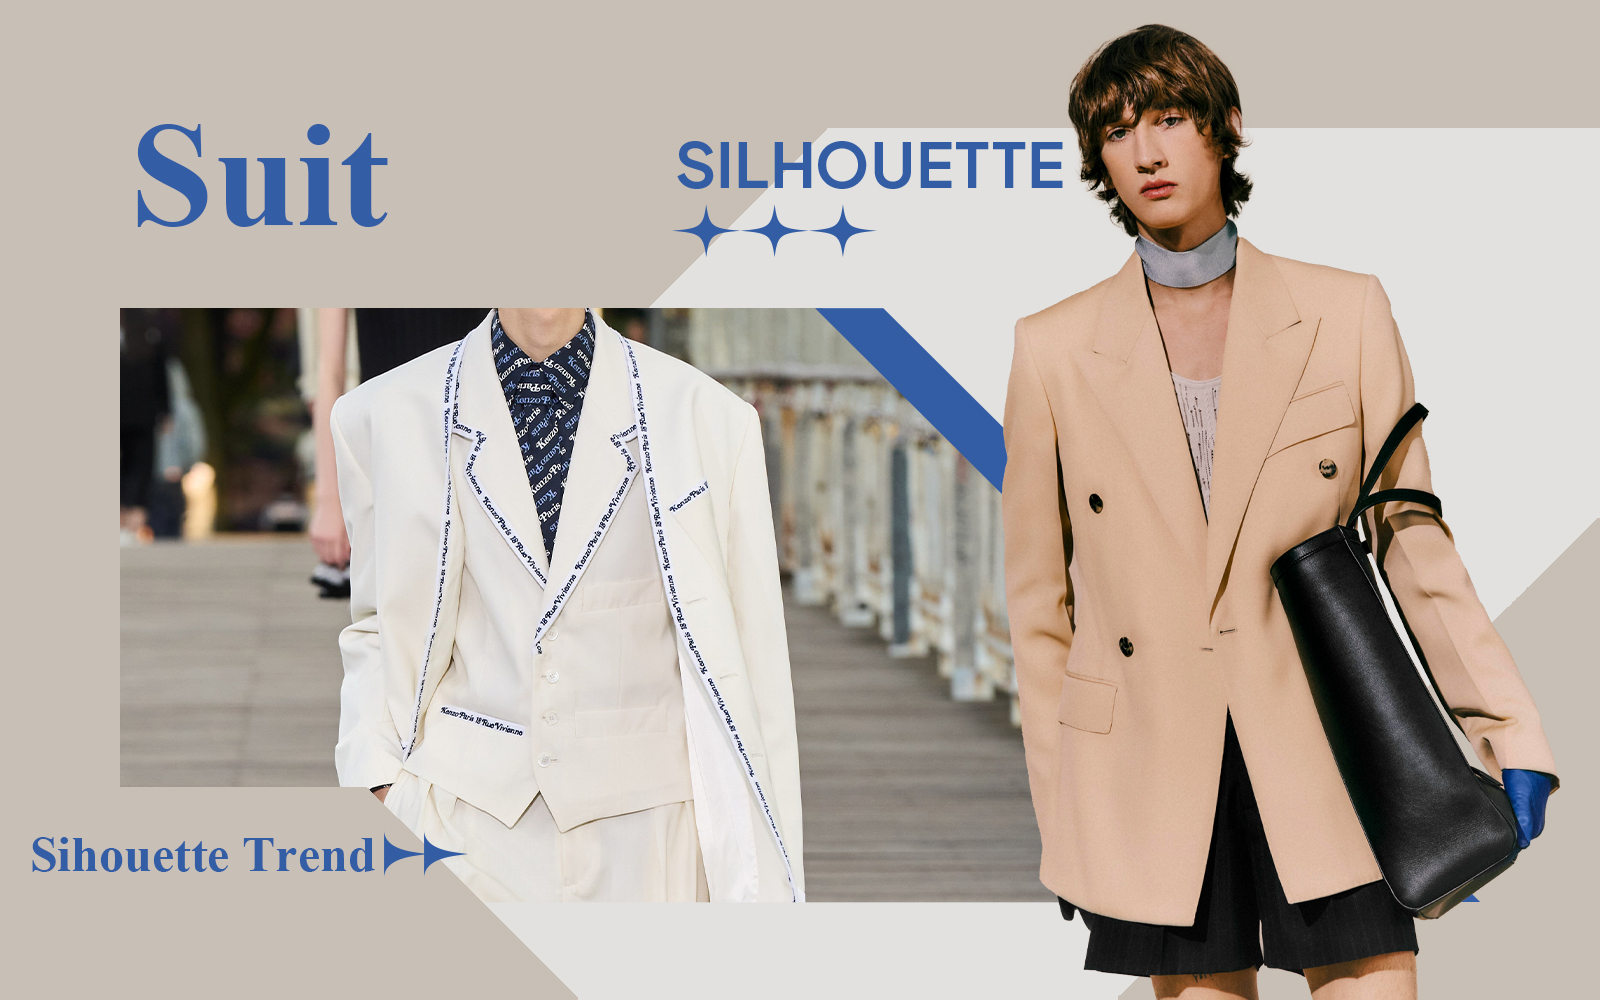 Fashion Commuter -- The Silhouette Trend for Men's Suit